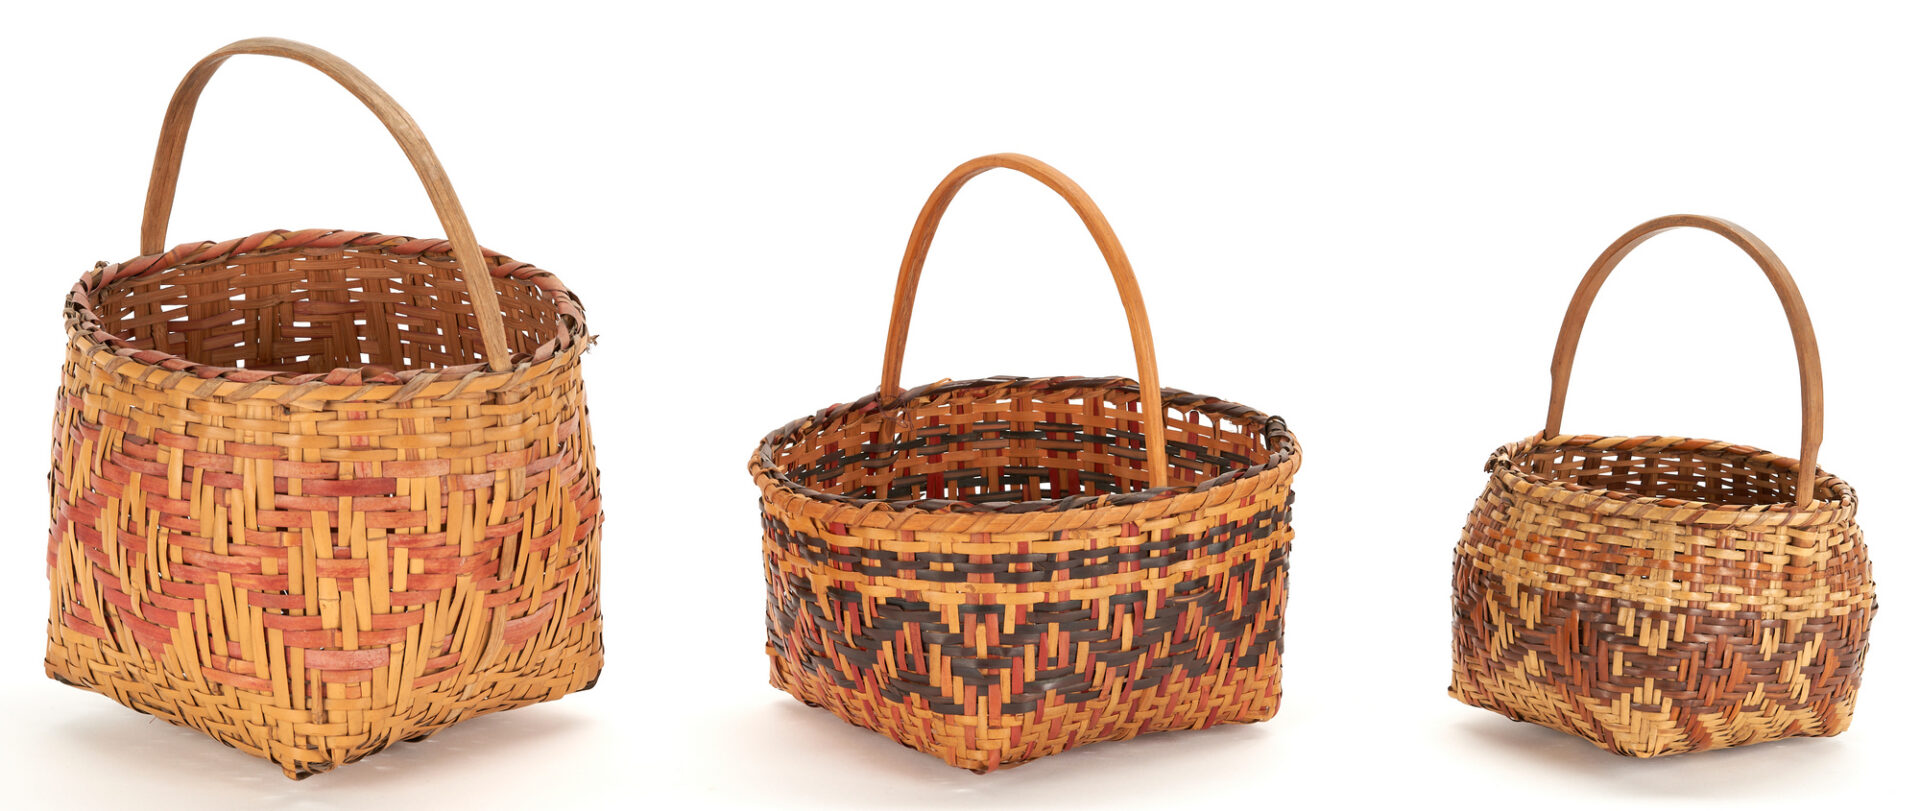 Lot 607: 3 Native American Cherokee Rivercane Baskets w/ Handles